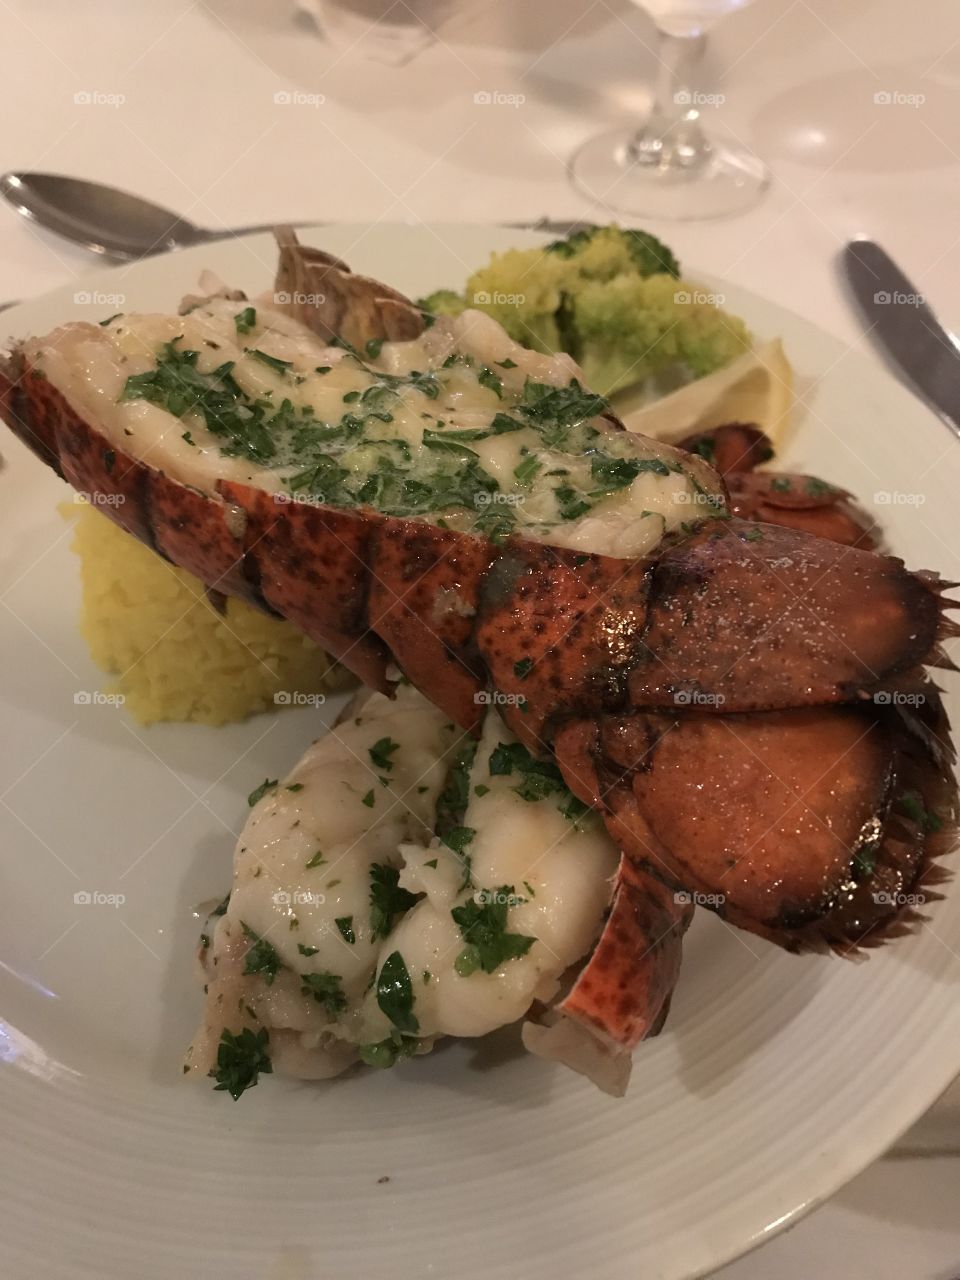 Cruise food yum yummy lobster tail butter garlic parsley meat dinner fancy fine dining lemon broccoli 